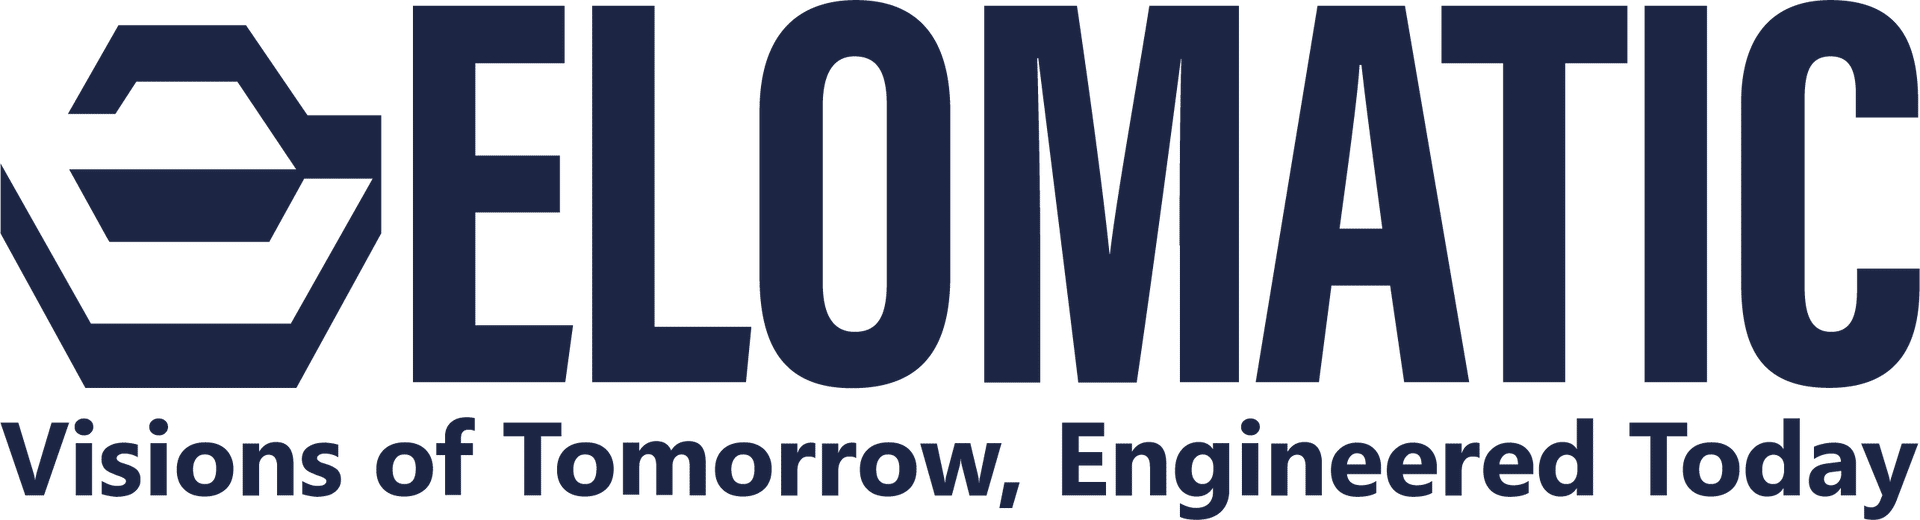 elomatic-logo-slogan-navy-transparent